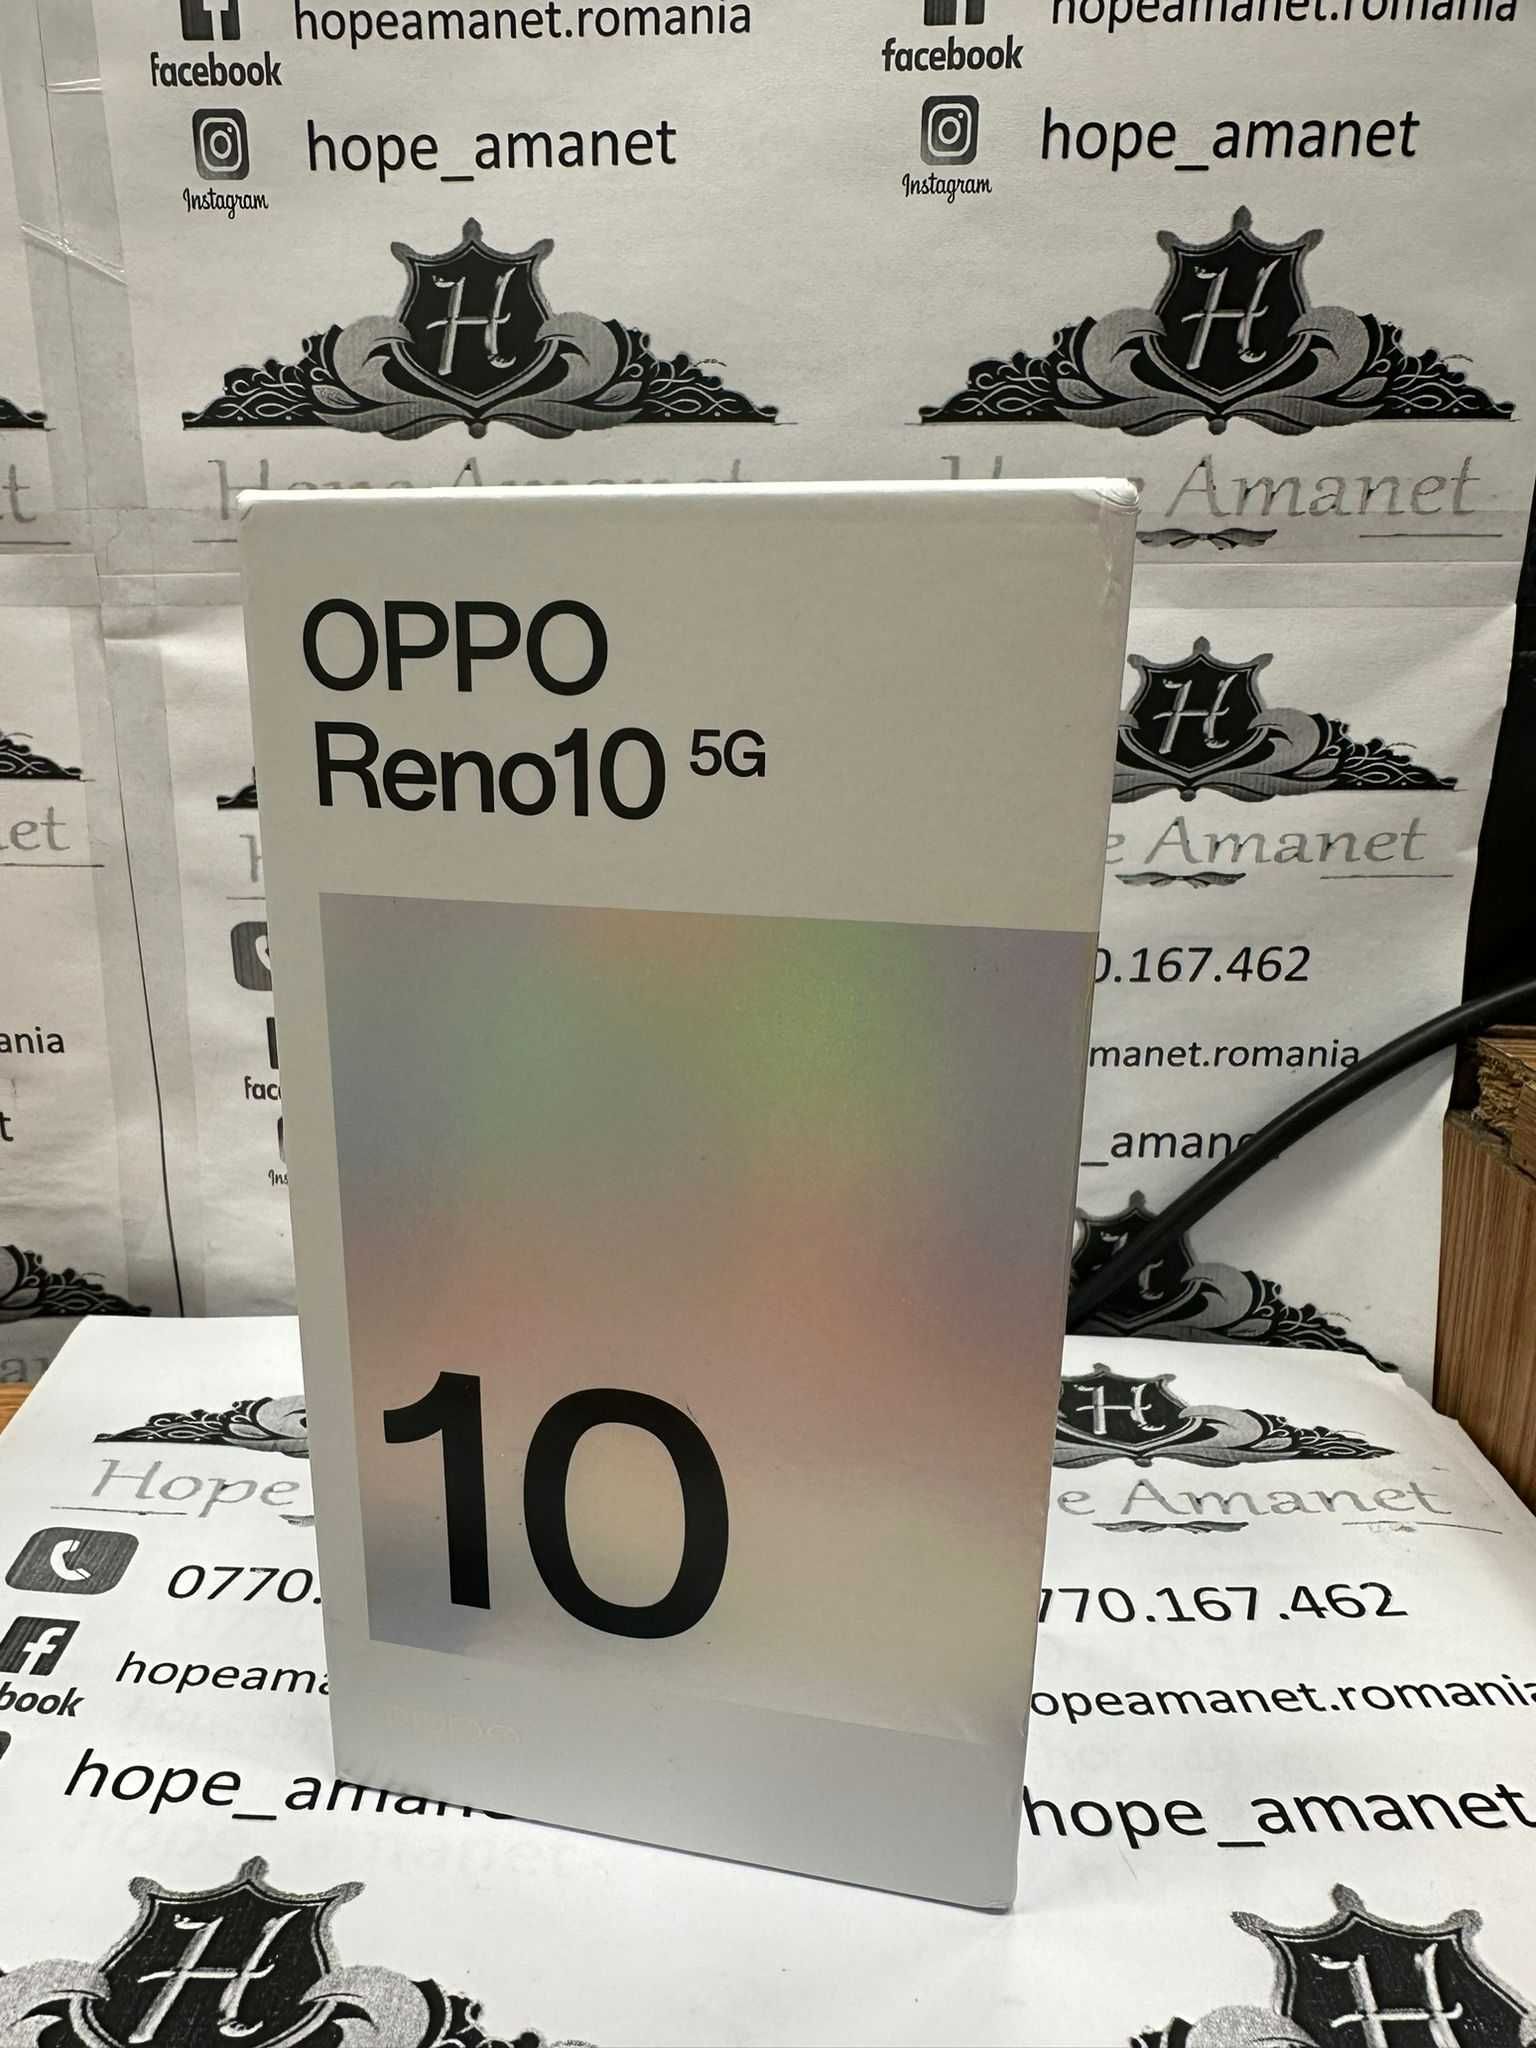 HOPE AMANET P12- Oppo Reno 10 5G/256-8 GB/Ice Blue/Desigilat pt proba!